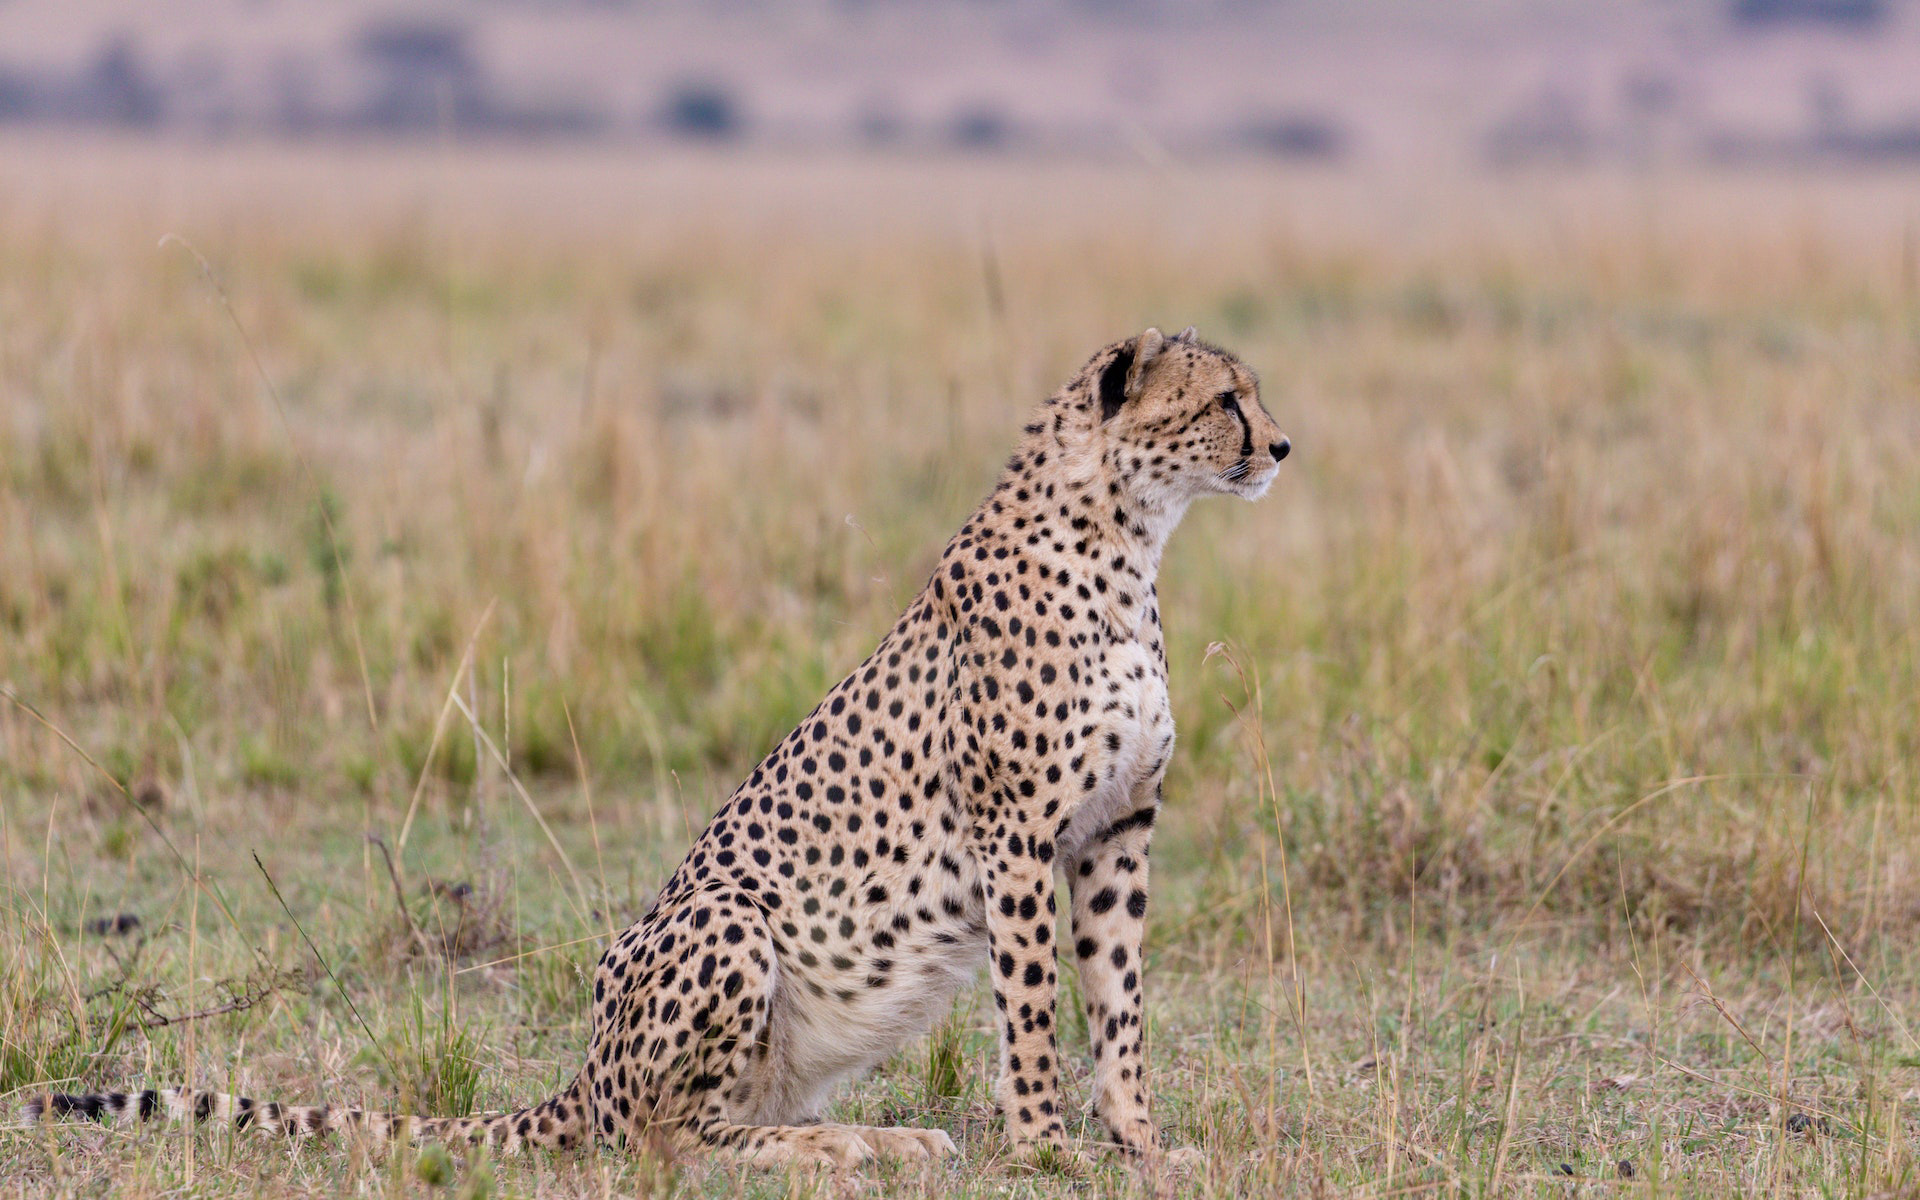 Graceful-cheetah-sitting-in-grassy-savanna-brilliant-safaris-tanzania